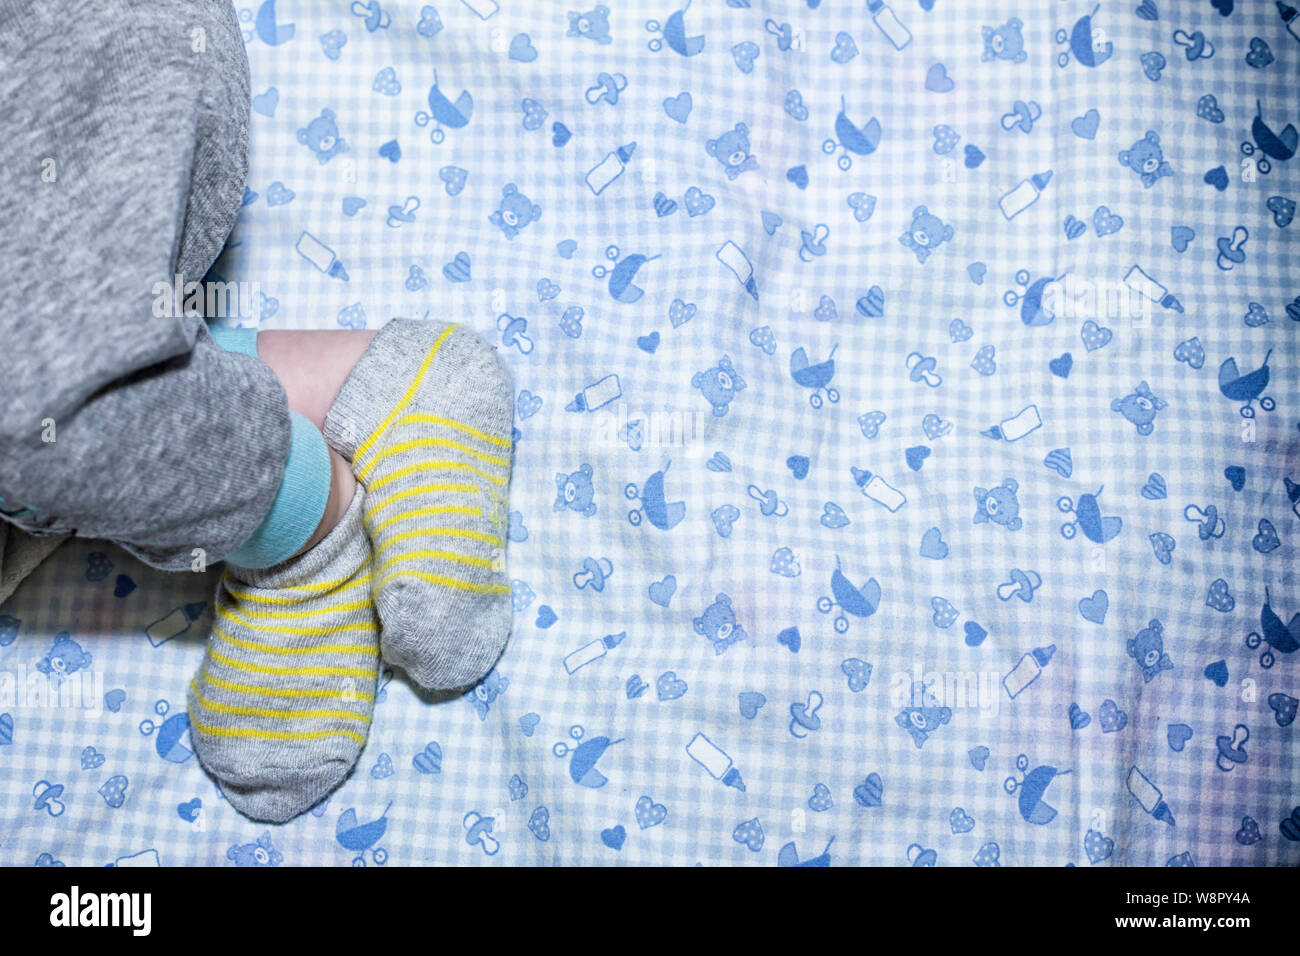 Newborn babies legs. Stocks and pijamas. Blue pattern background. Stock Photo